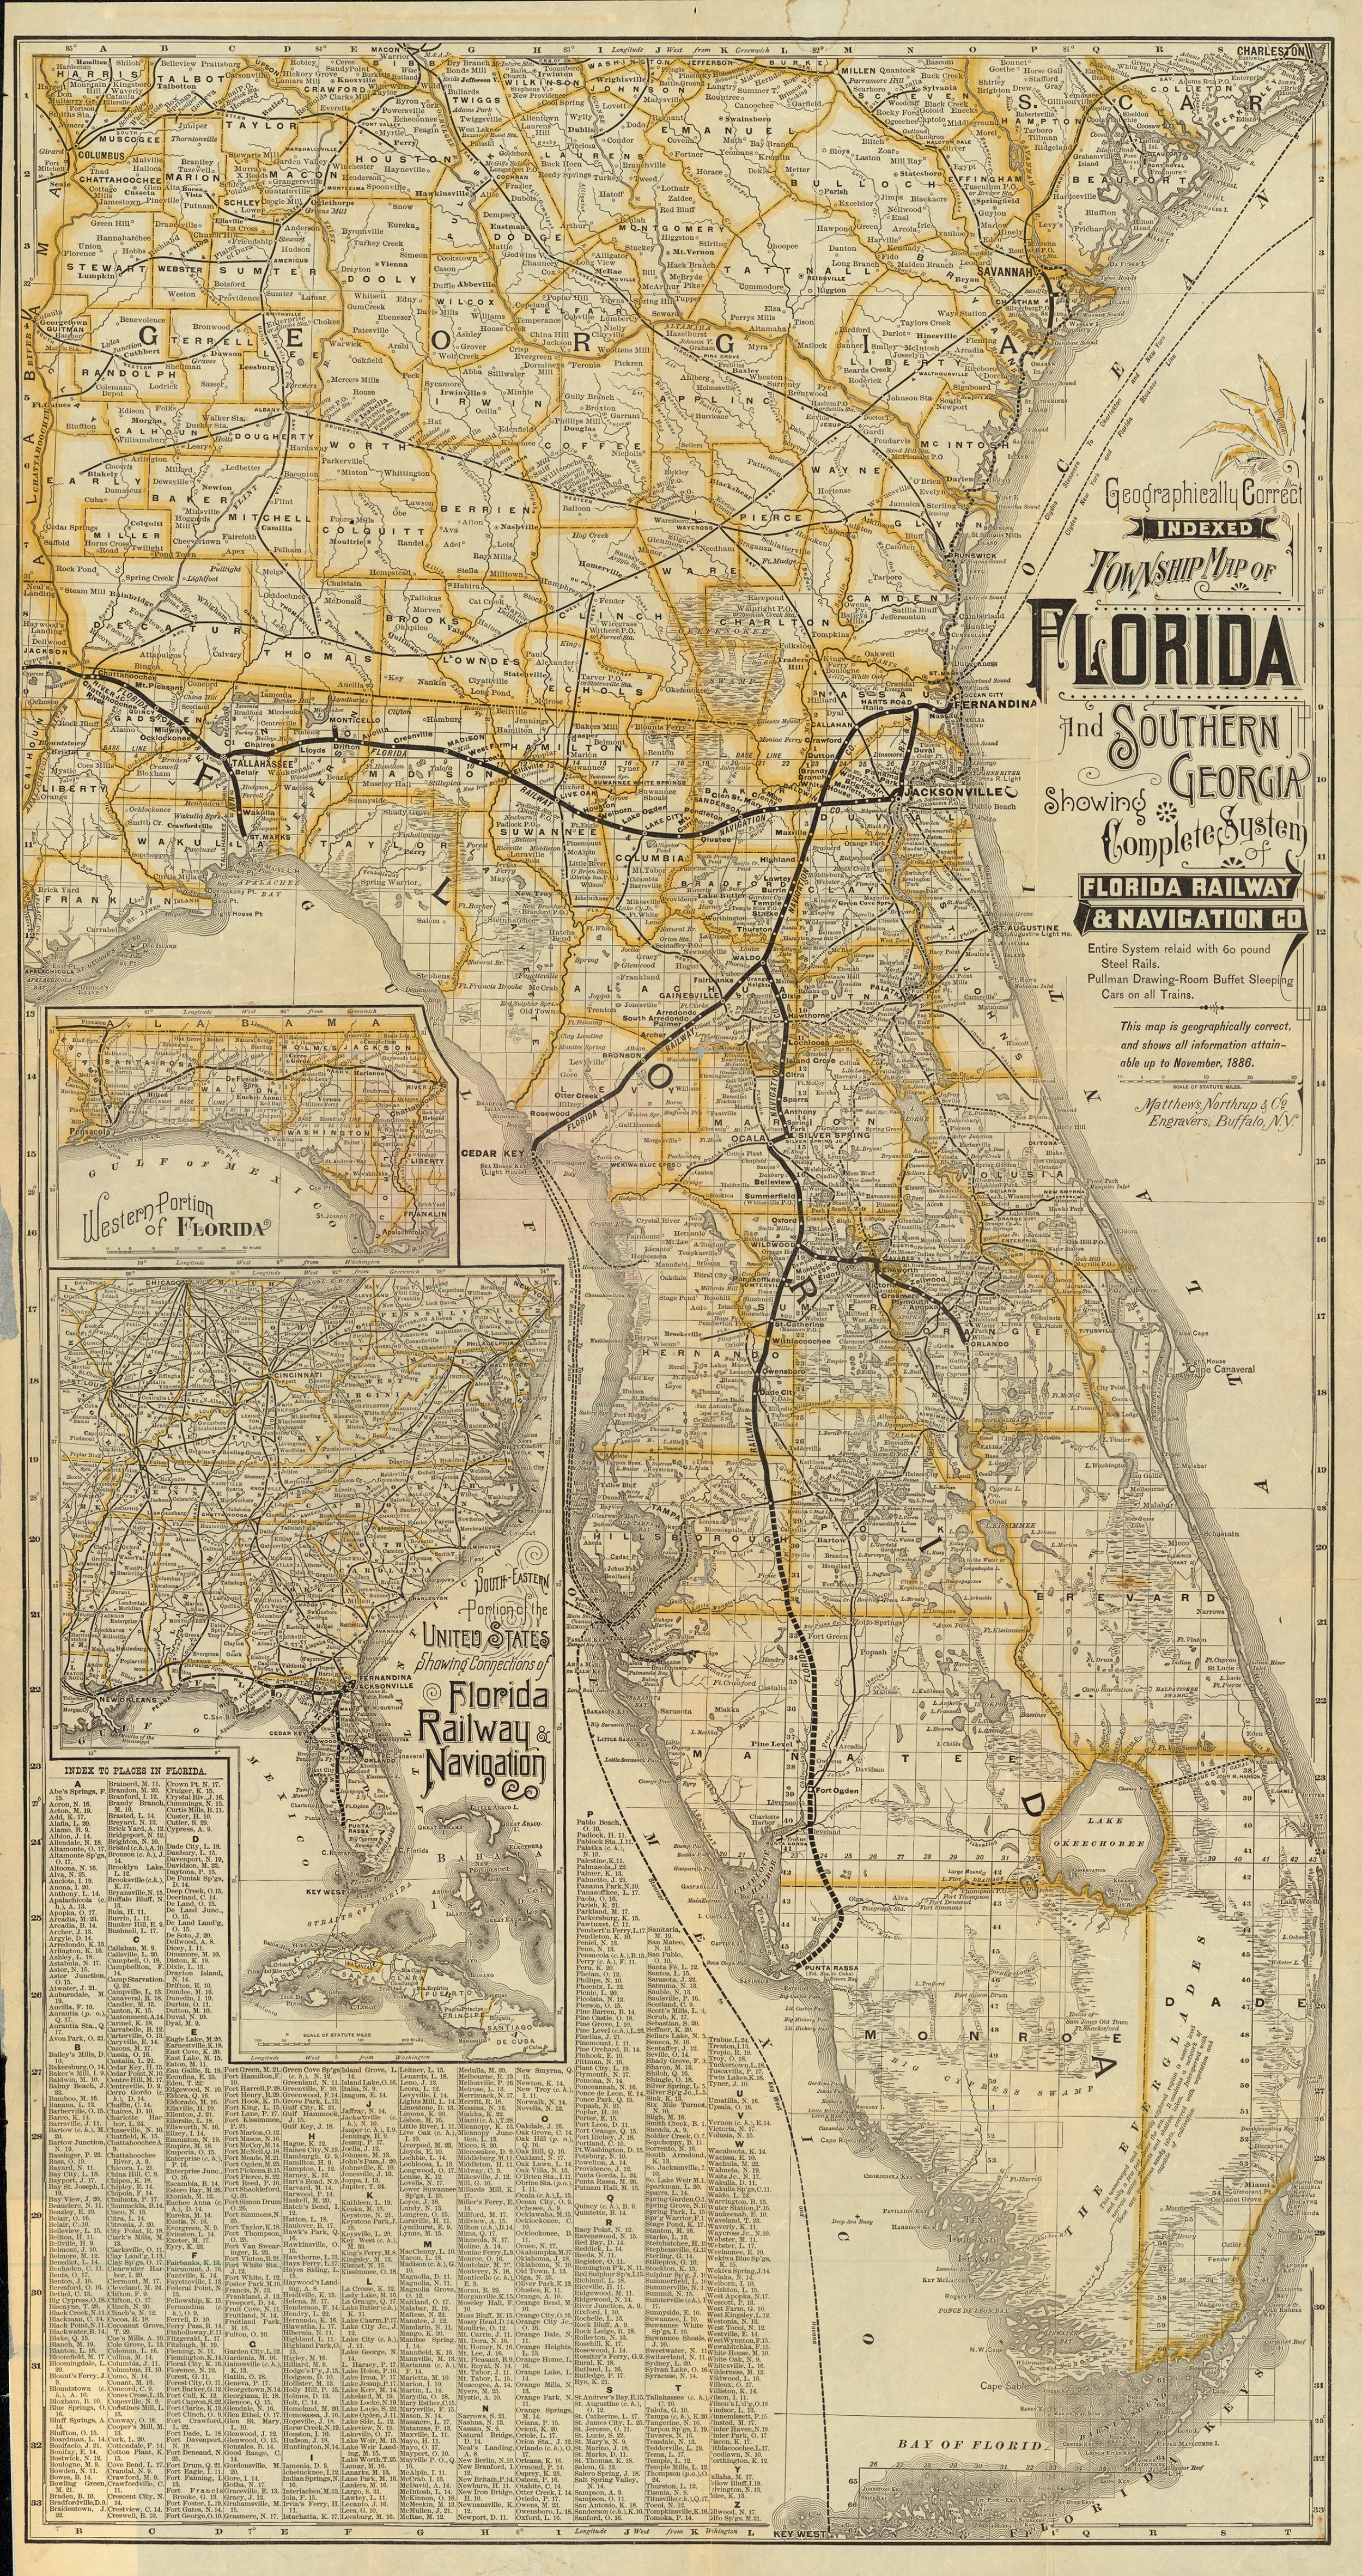 Florida Railroad & Navigation Co.: Florida and South Georgia, 1886